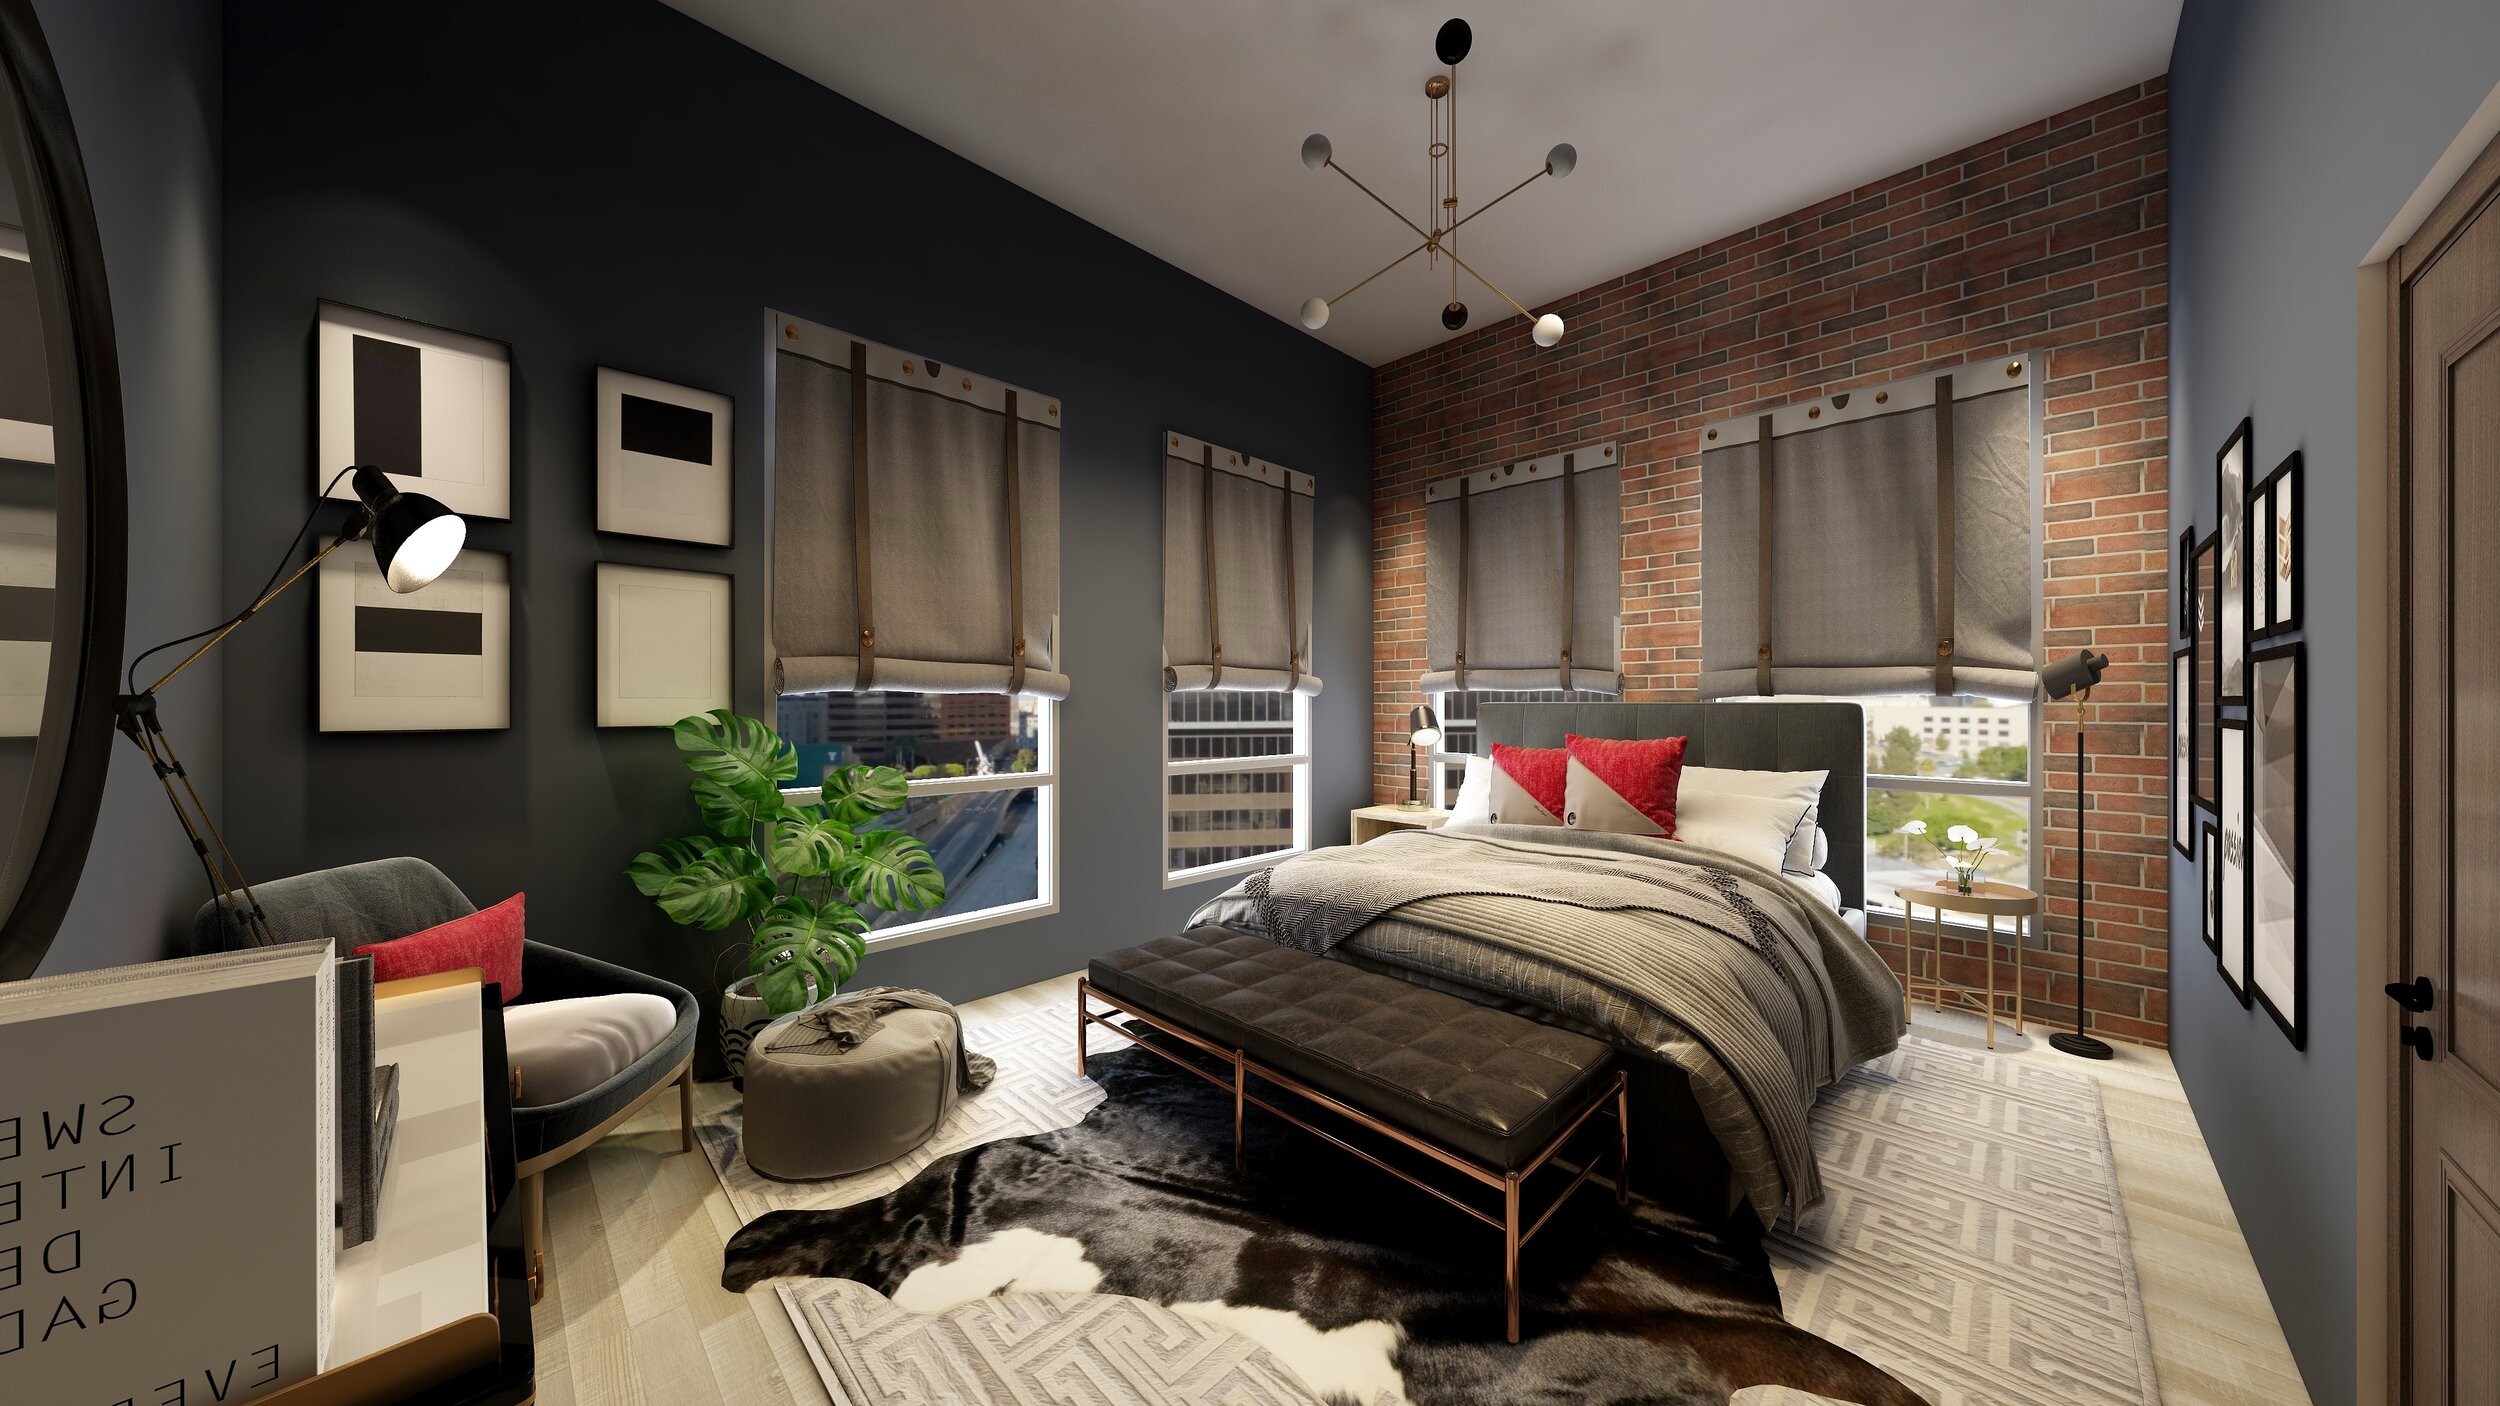 Bedroom Interior Design - Contemporary & Calm Style | Hommés Studio